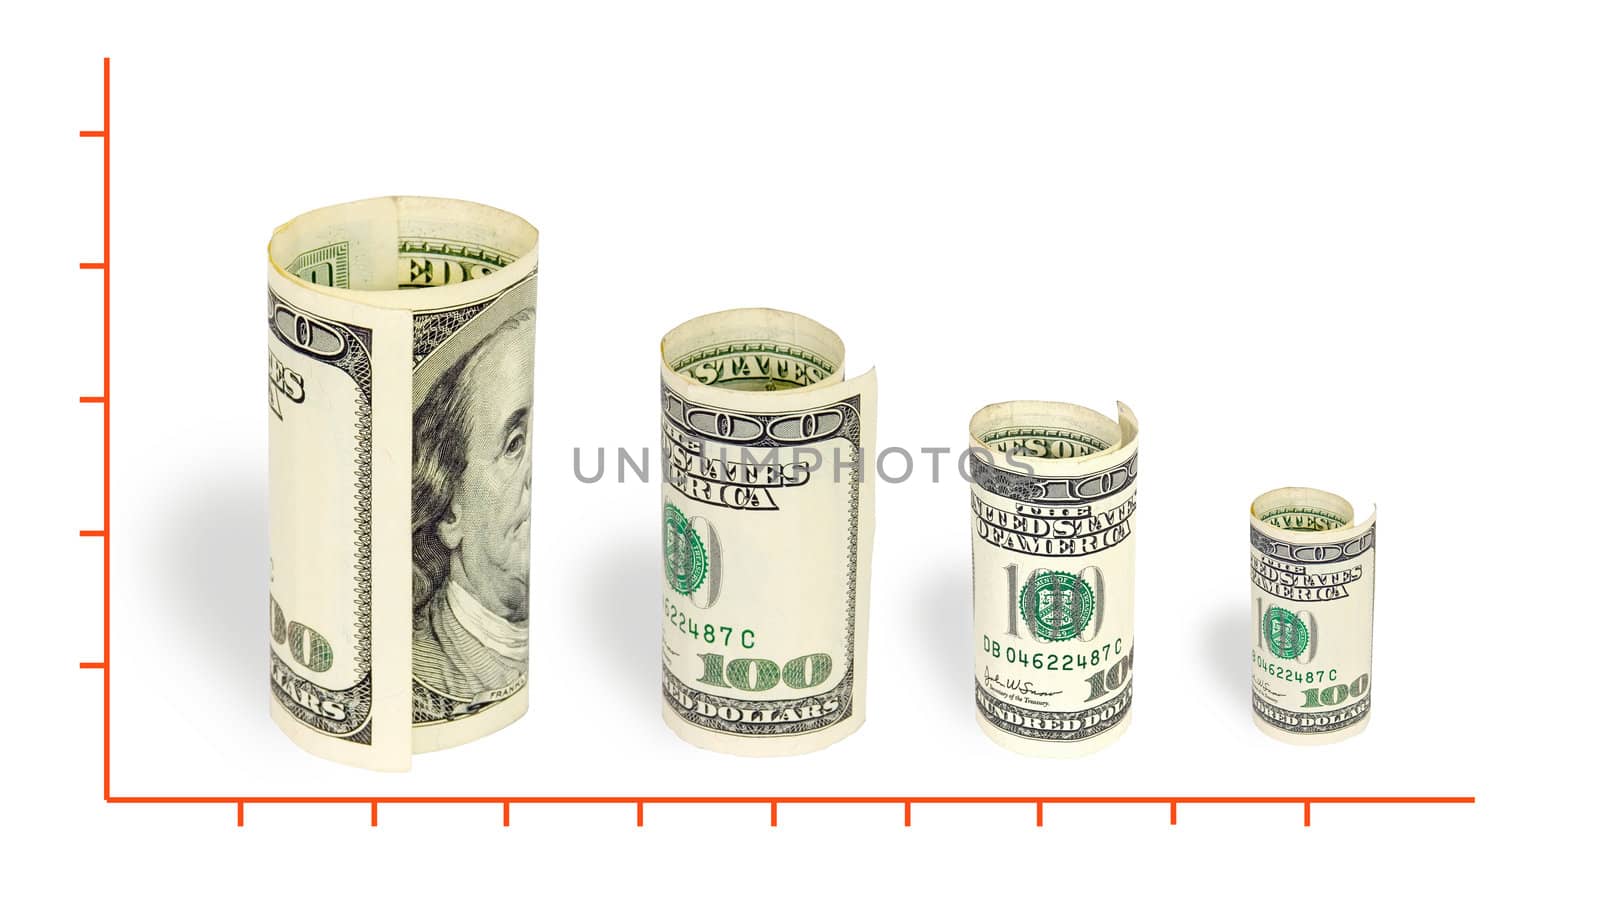 KONICA MINOLTA DIGITAL CAMERA dollar rate on white background